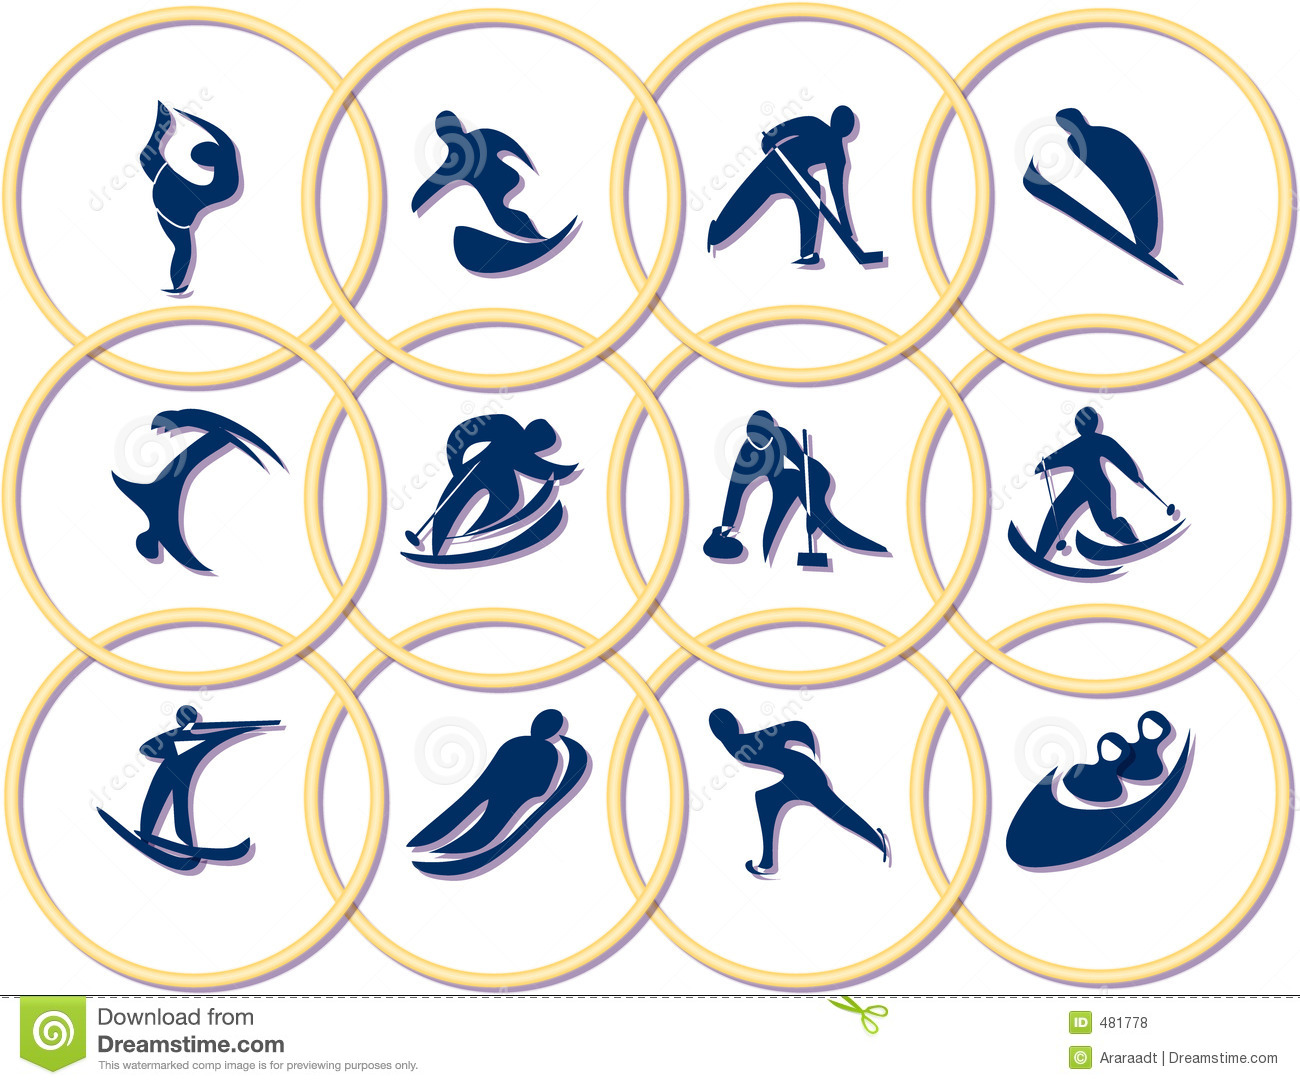 Olympic Games Symbols Royalty Free Stock Photos   Image  481778